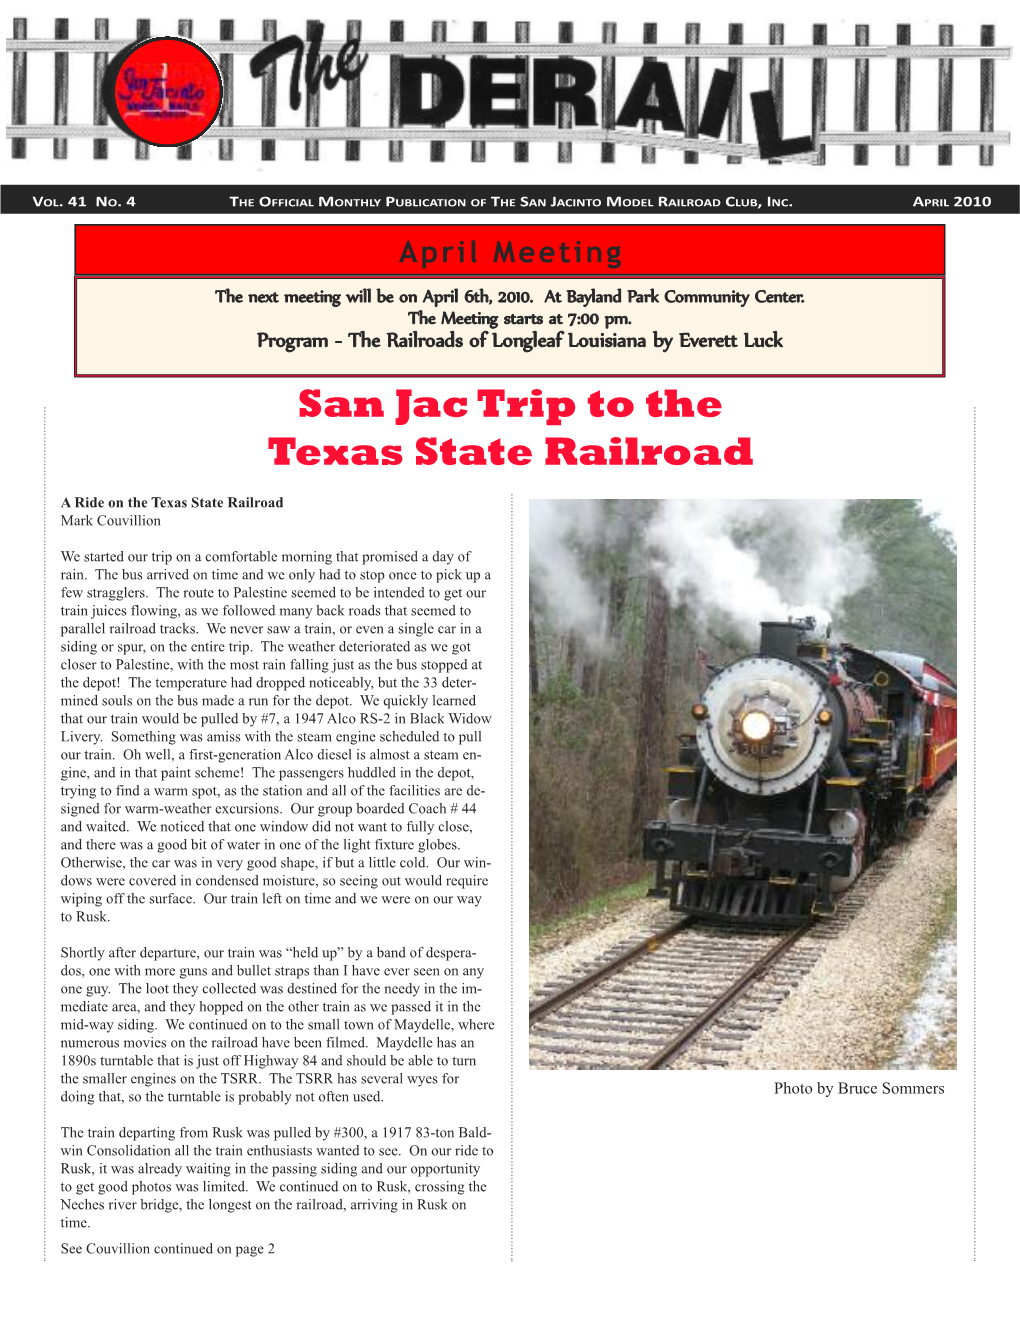 San Jac Trip to the Texas State Railroad